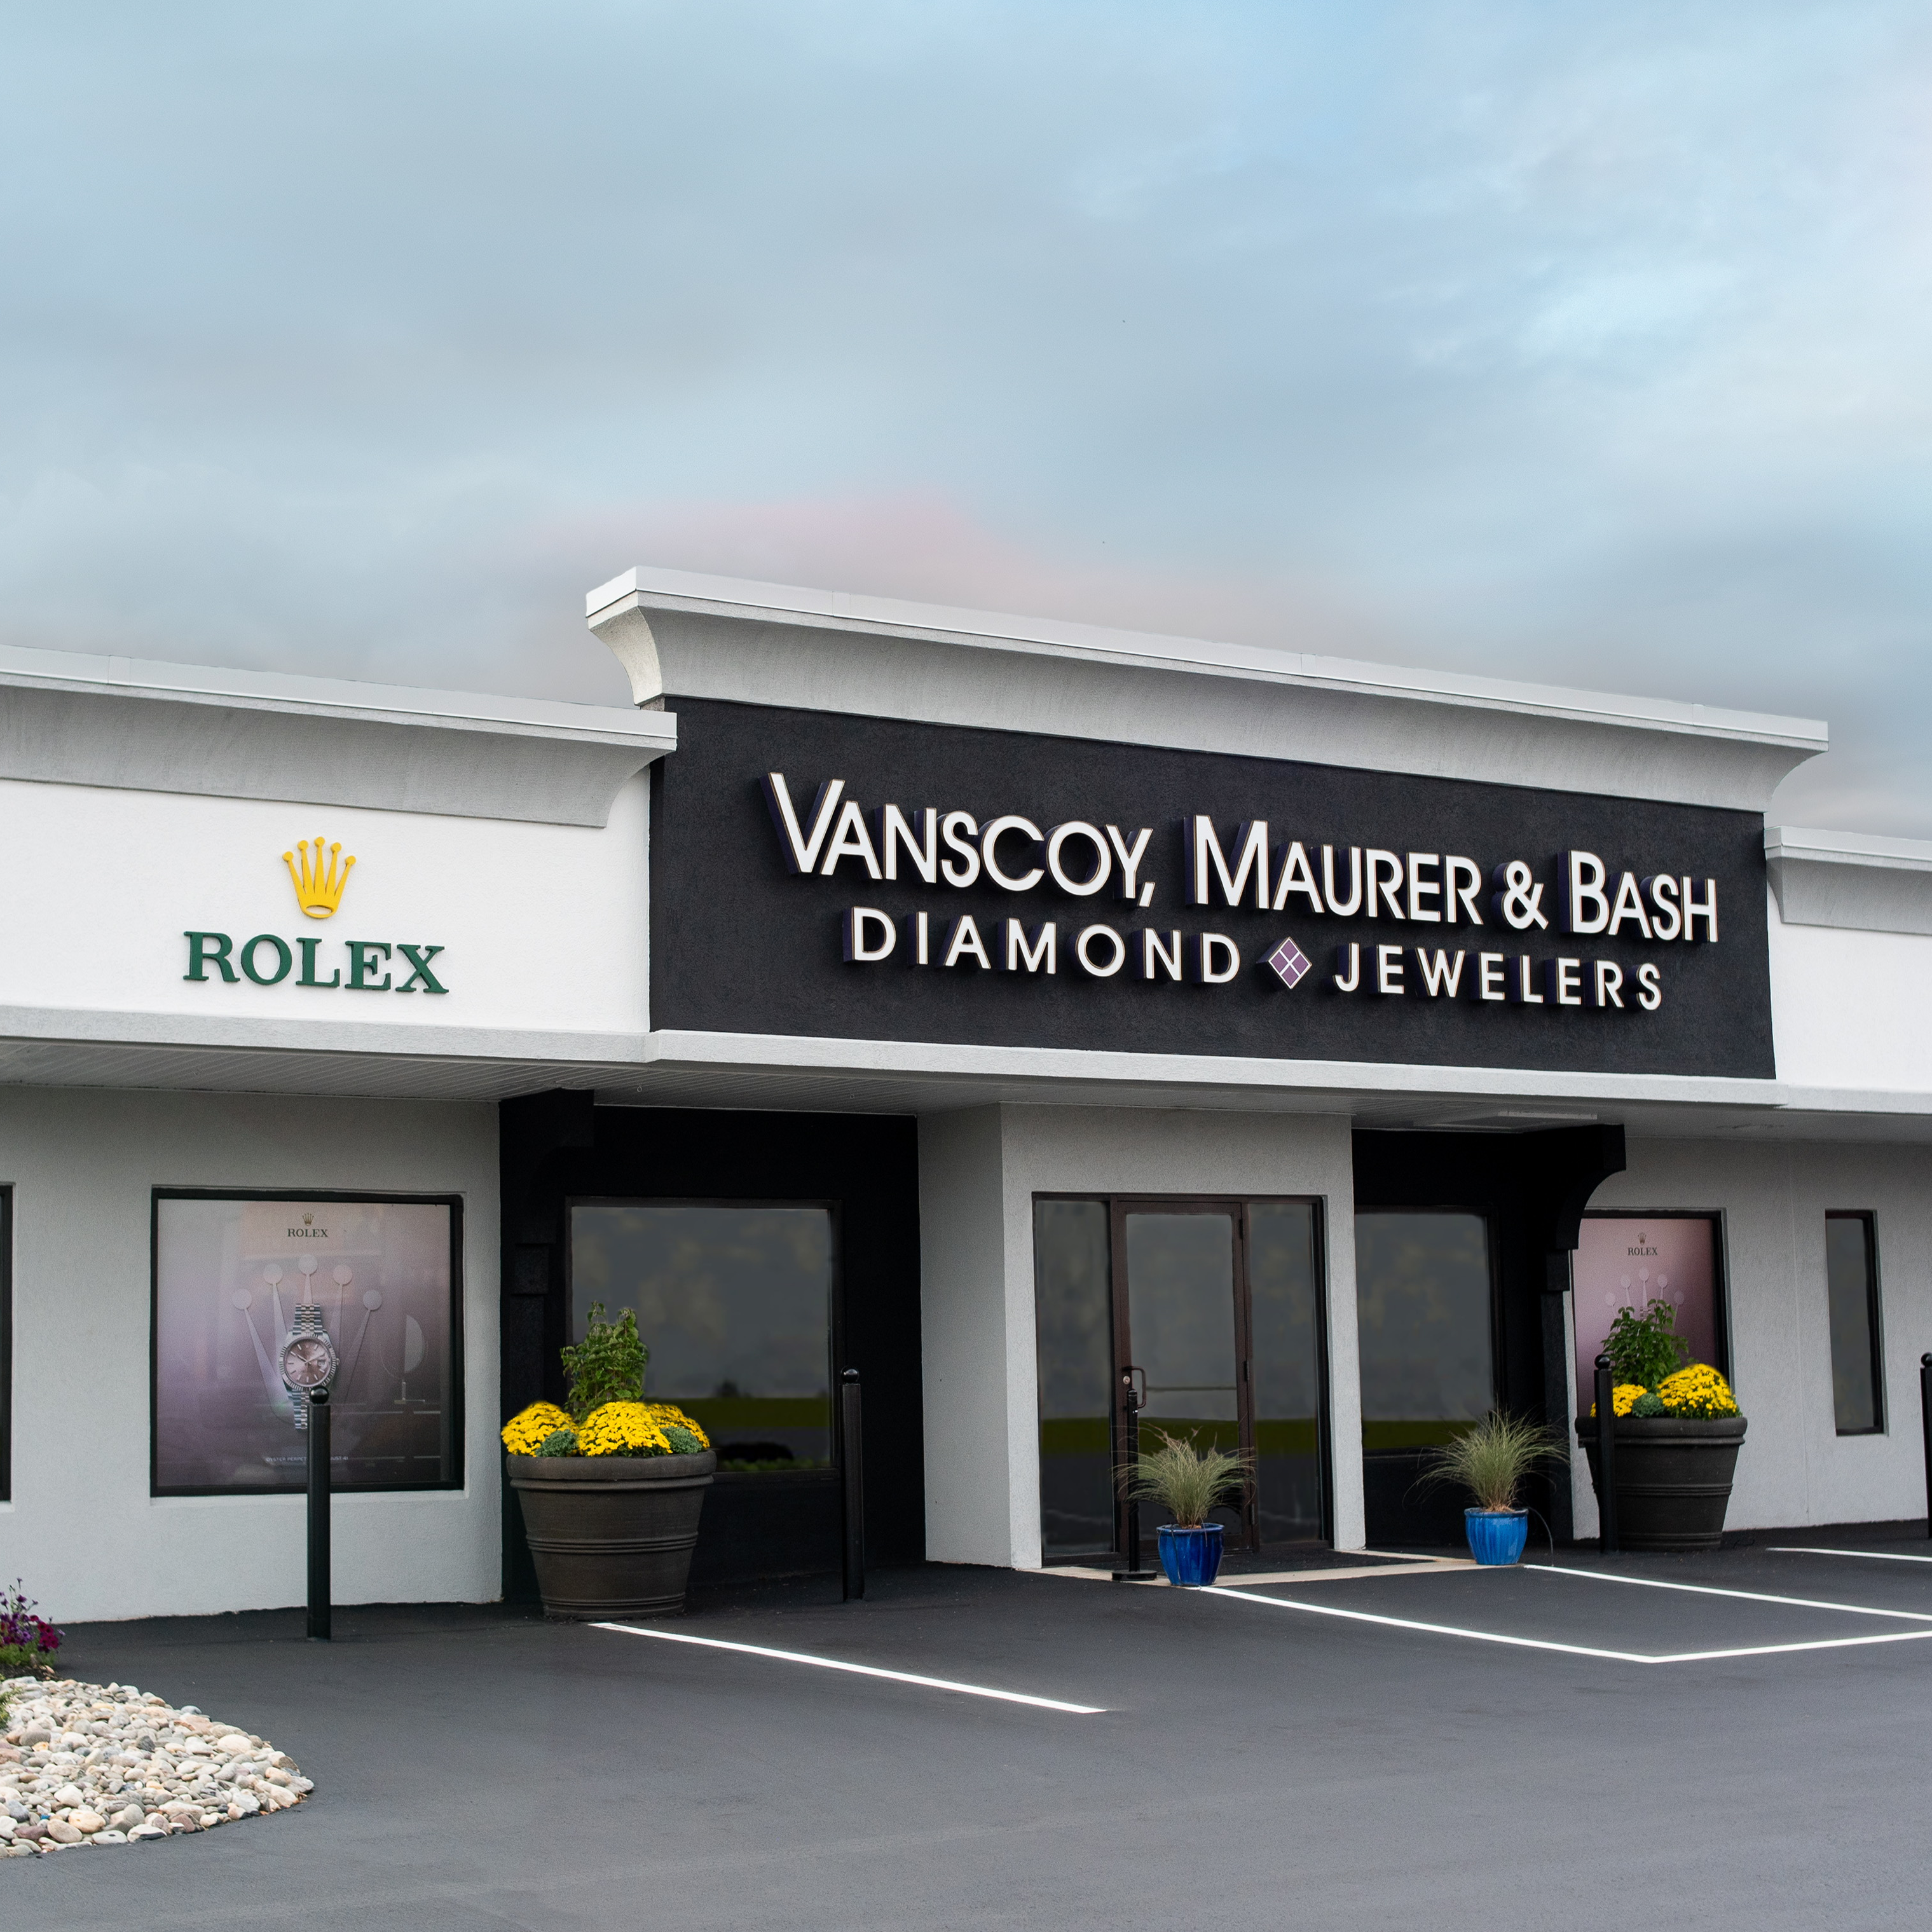 Vanscoy, Maurer & Bash Diamond Jewelers logo